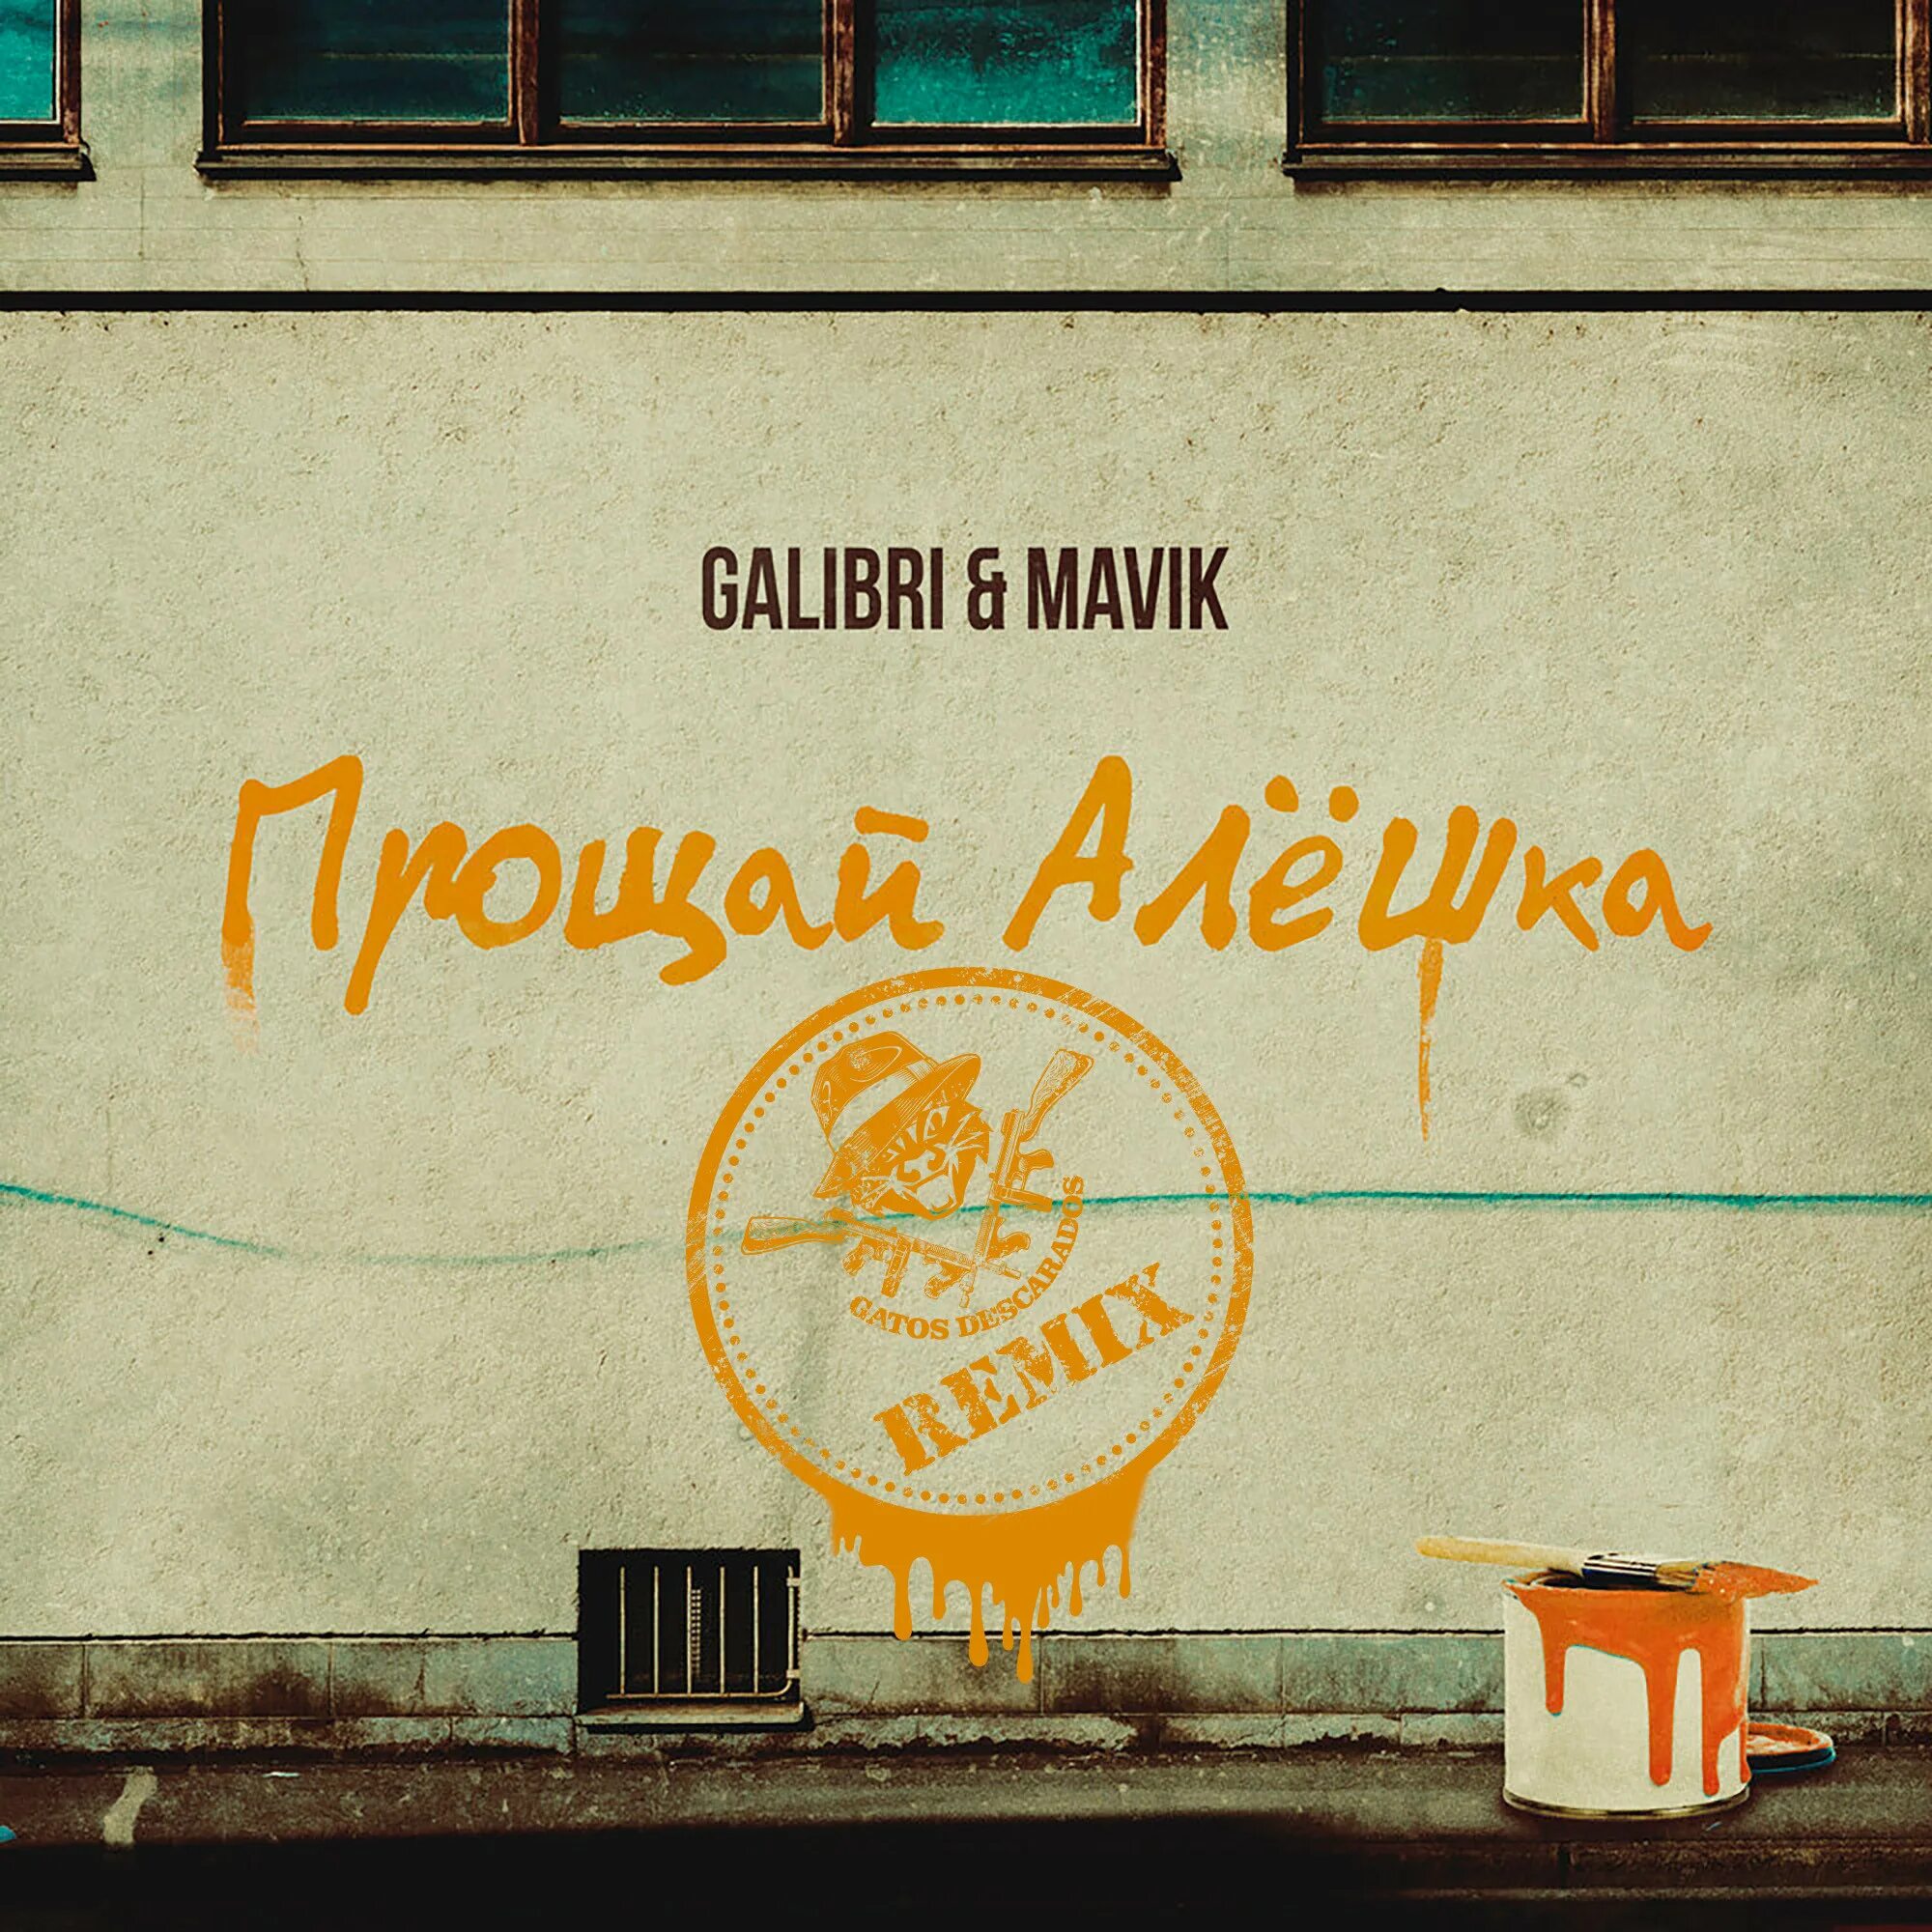 Прощай алёшка galibri. Galibri & mavik. Прощай, алёшка galibri & mavik текст. Galibri & mavik - Прощай, алёшка (Leonov & Gurevich Remix).